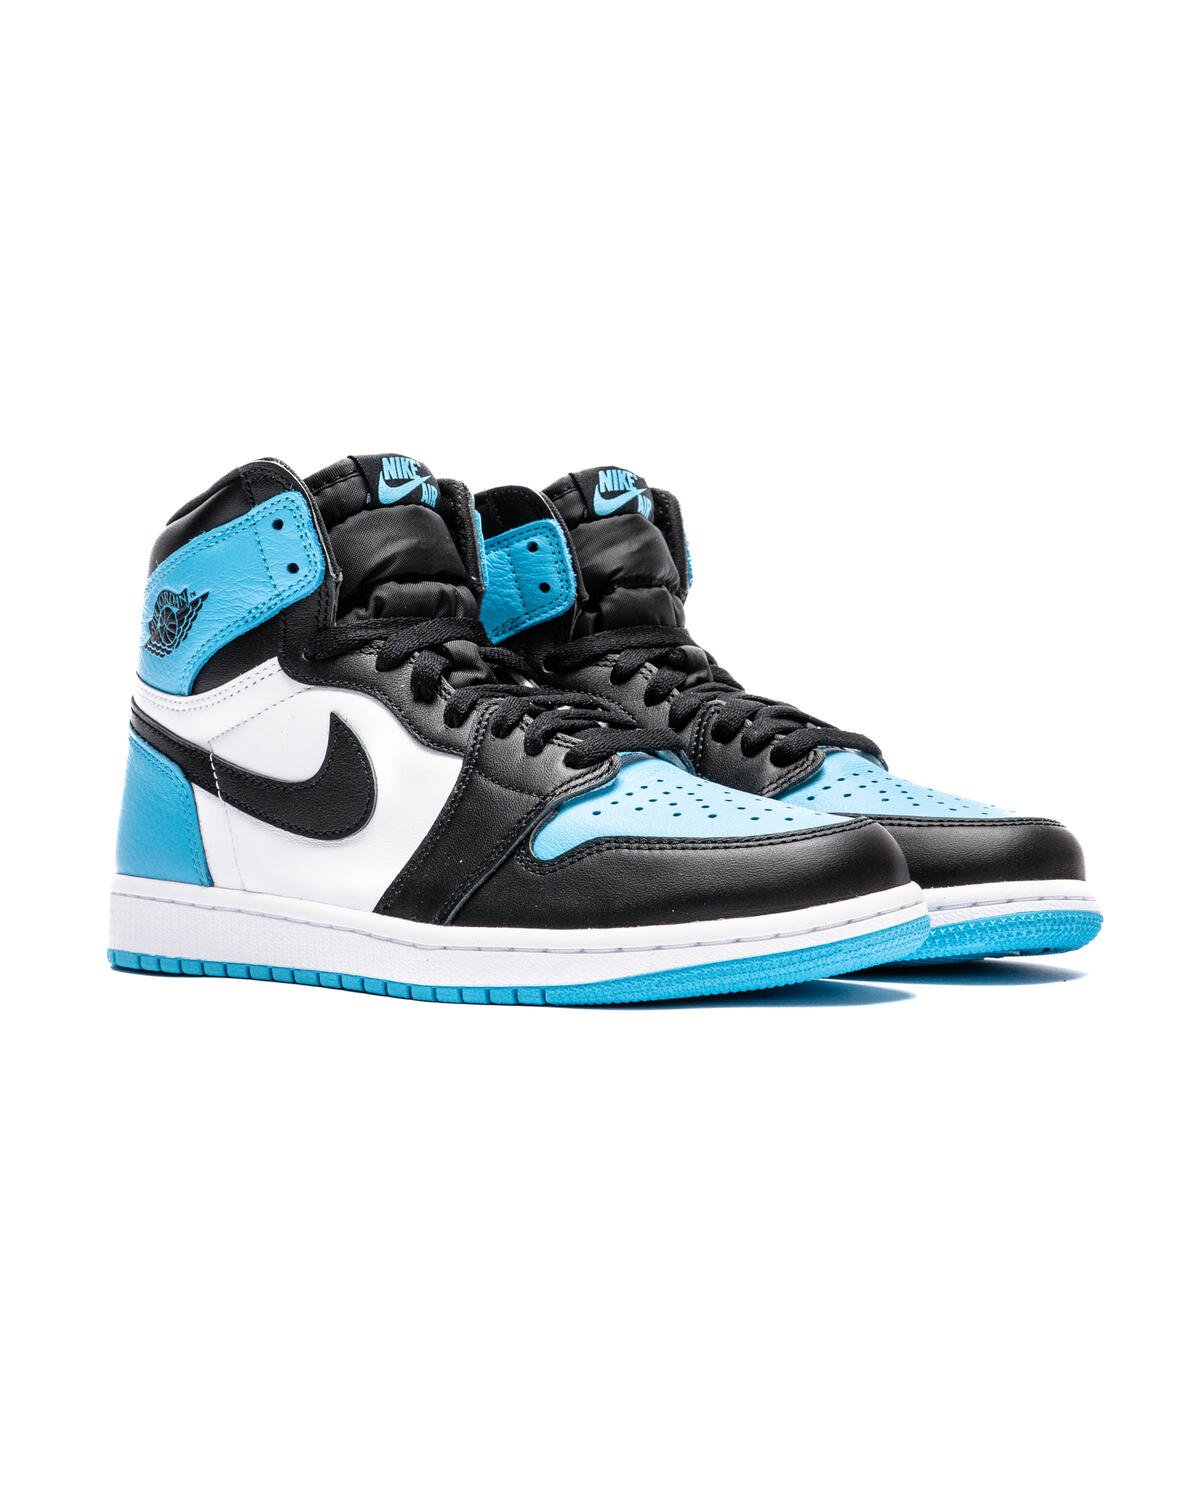 Nike air jordan 1 retro high og unc toe university blue blac, first look  at the fragment design x air jordan 1 black toe sample